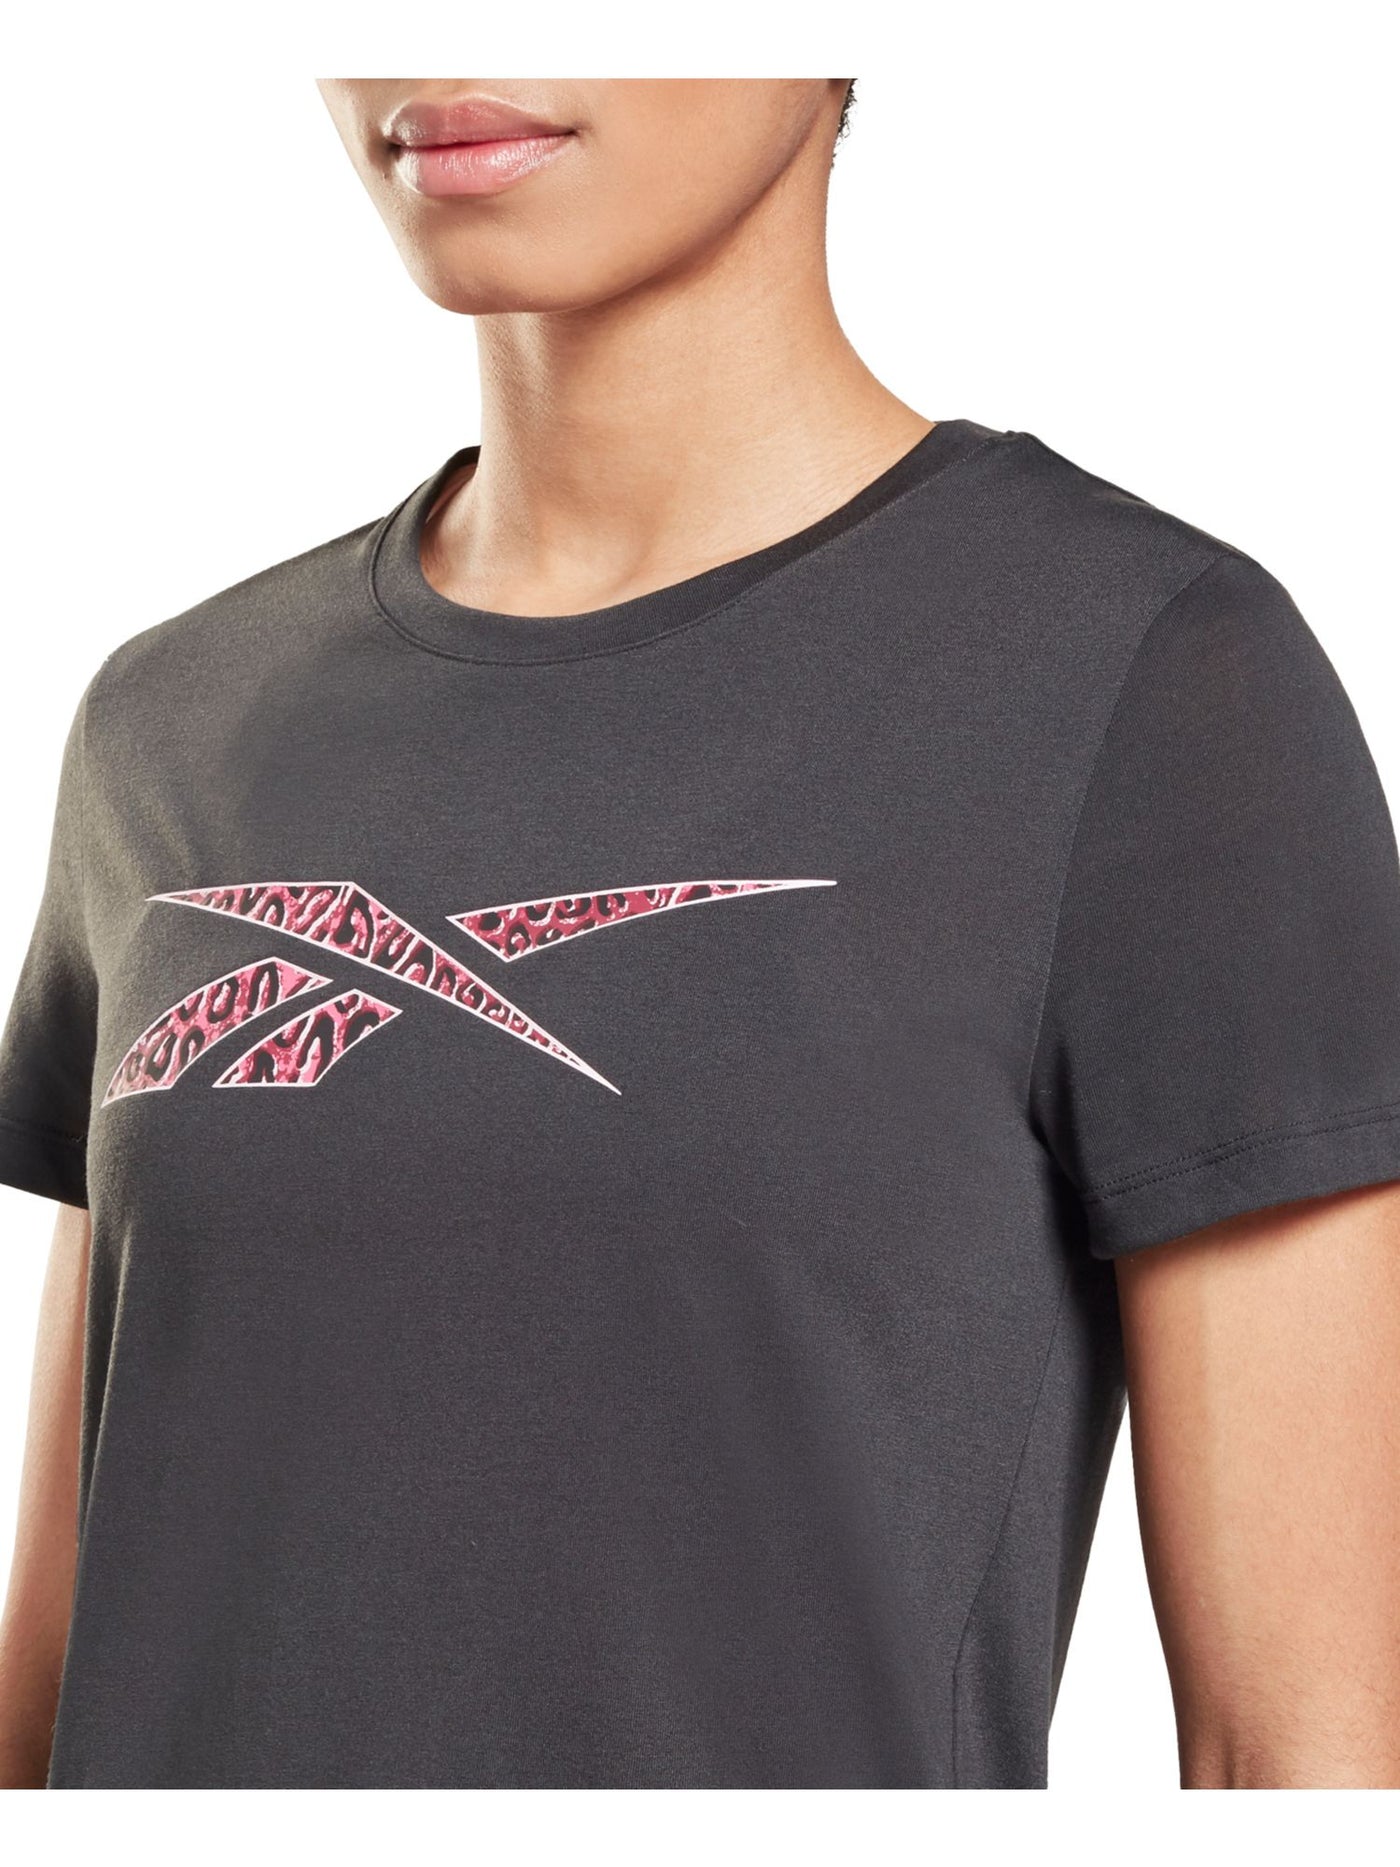 REEBOK Womens Black Logo Graphic Short Sleeve Crew Neck T-Shirt XS